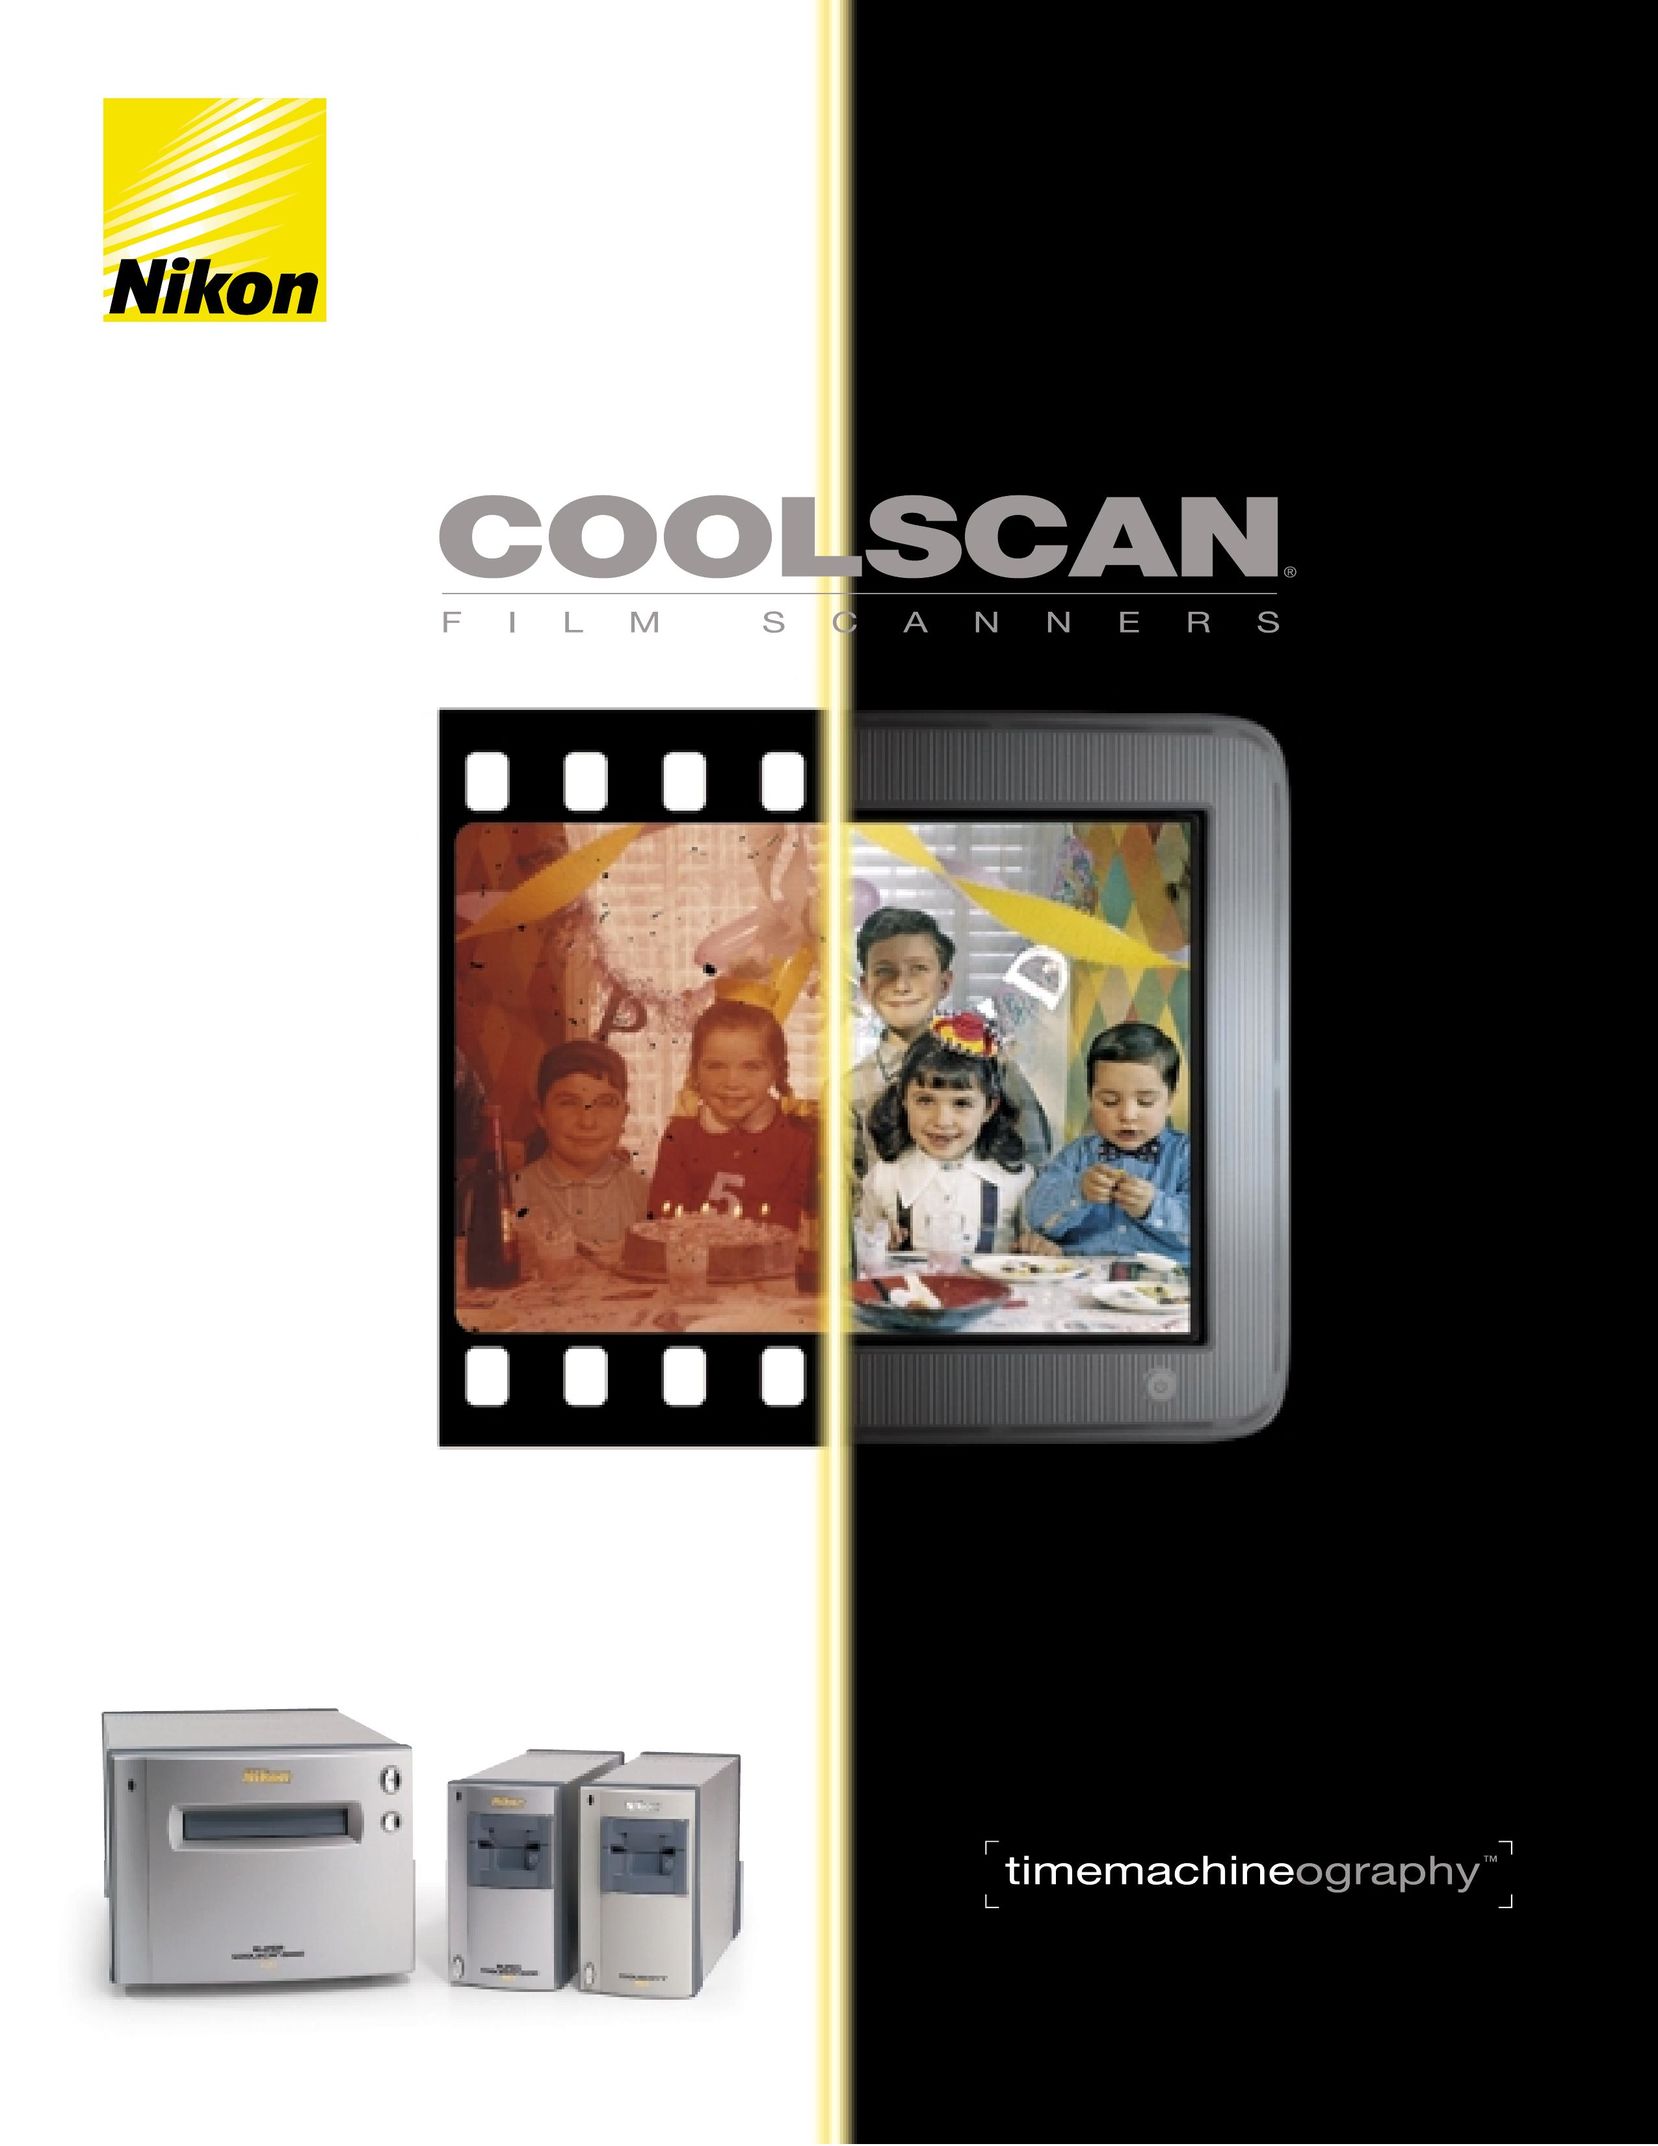 Nikon 5000 ED Scanner User Manual